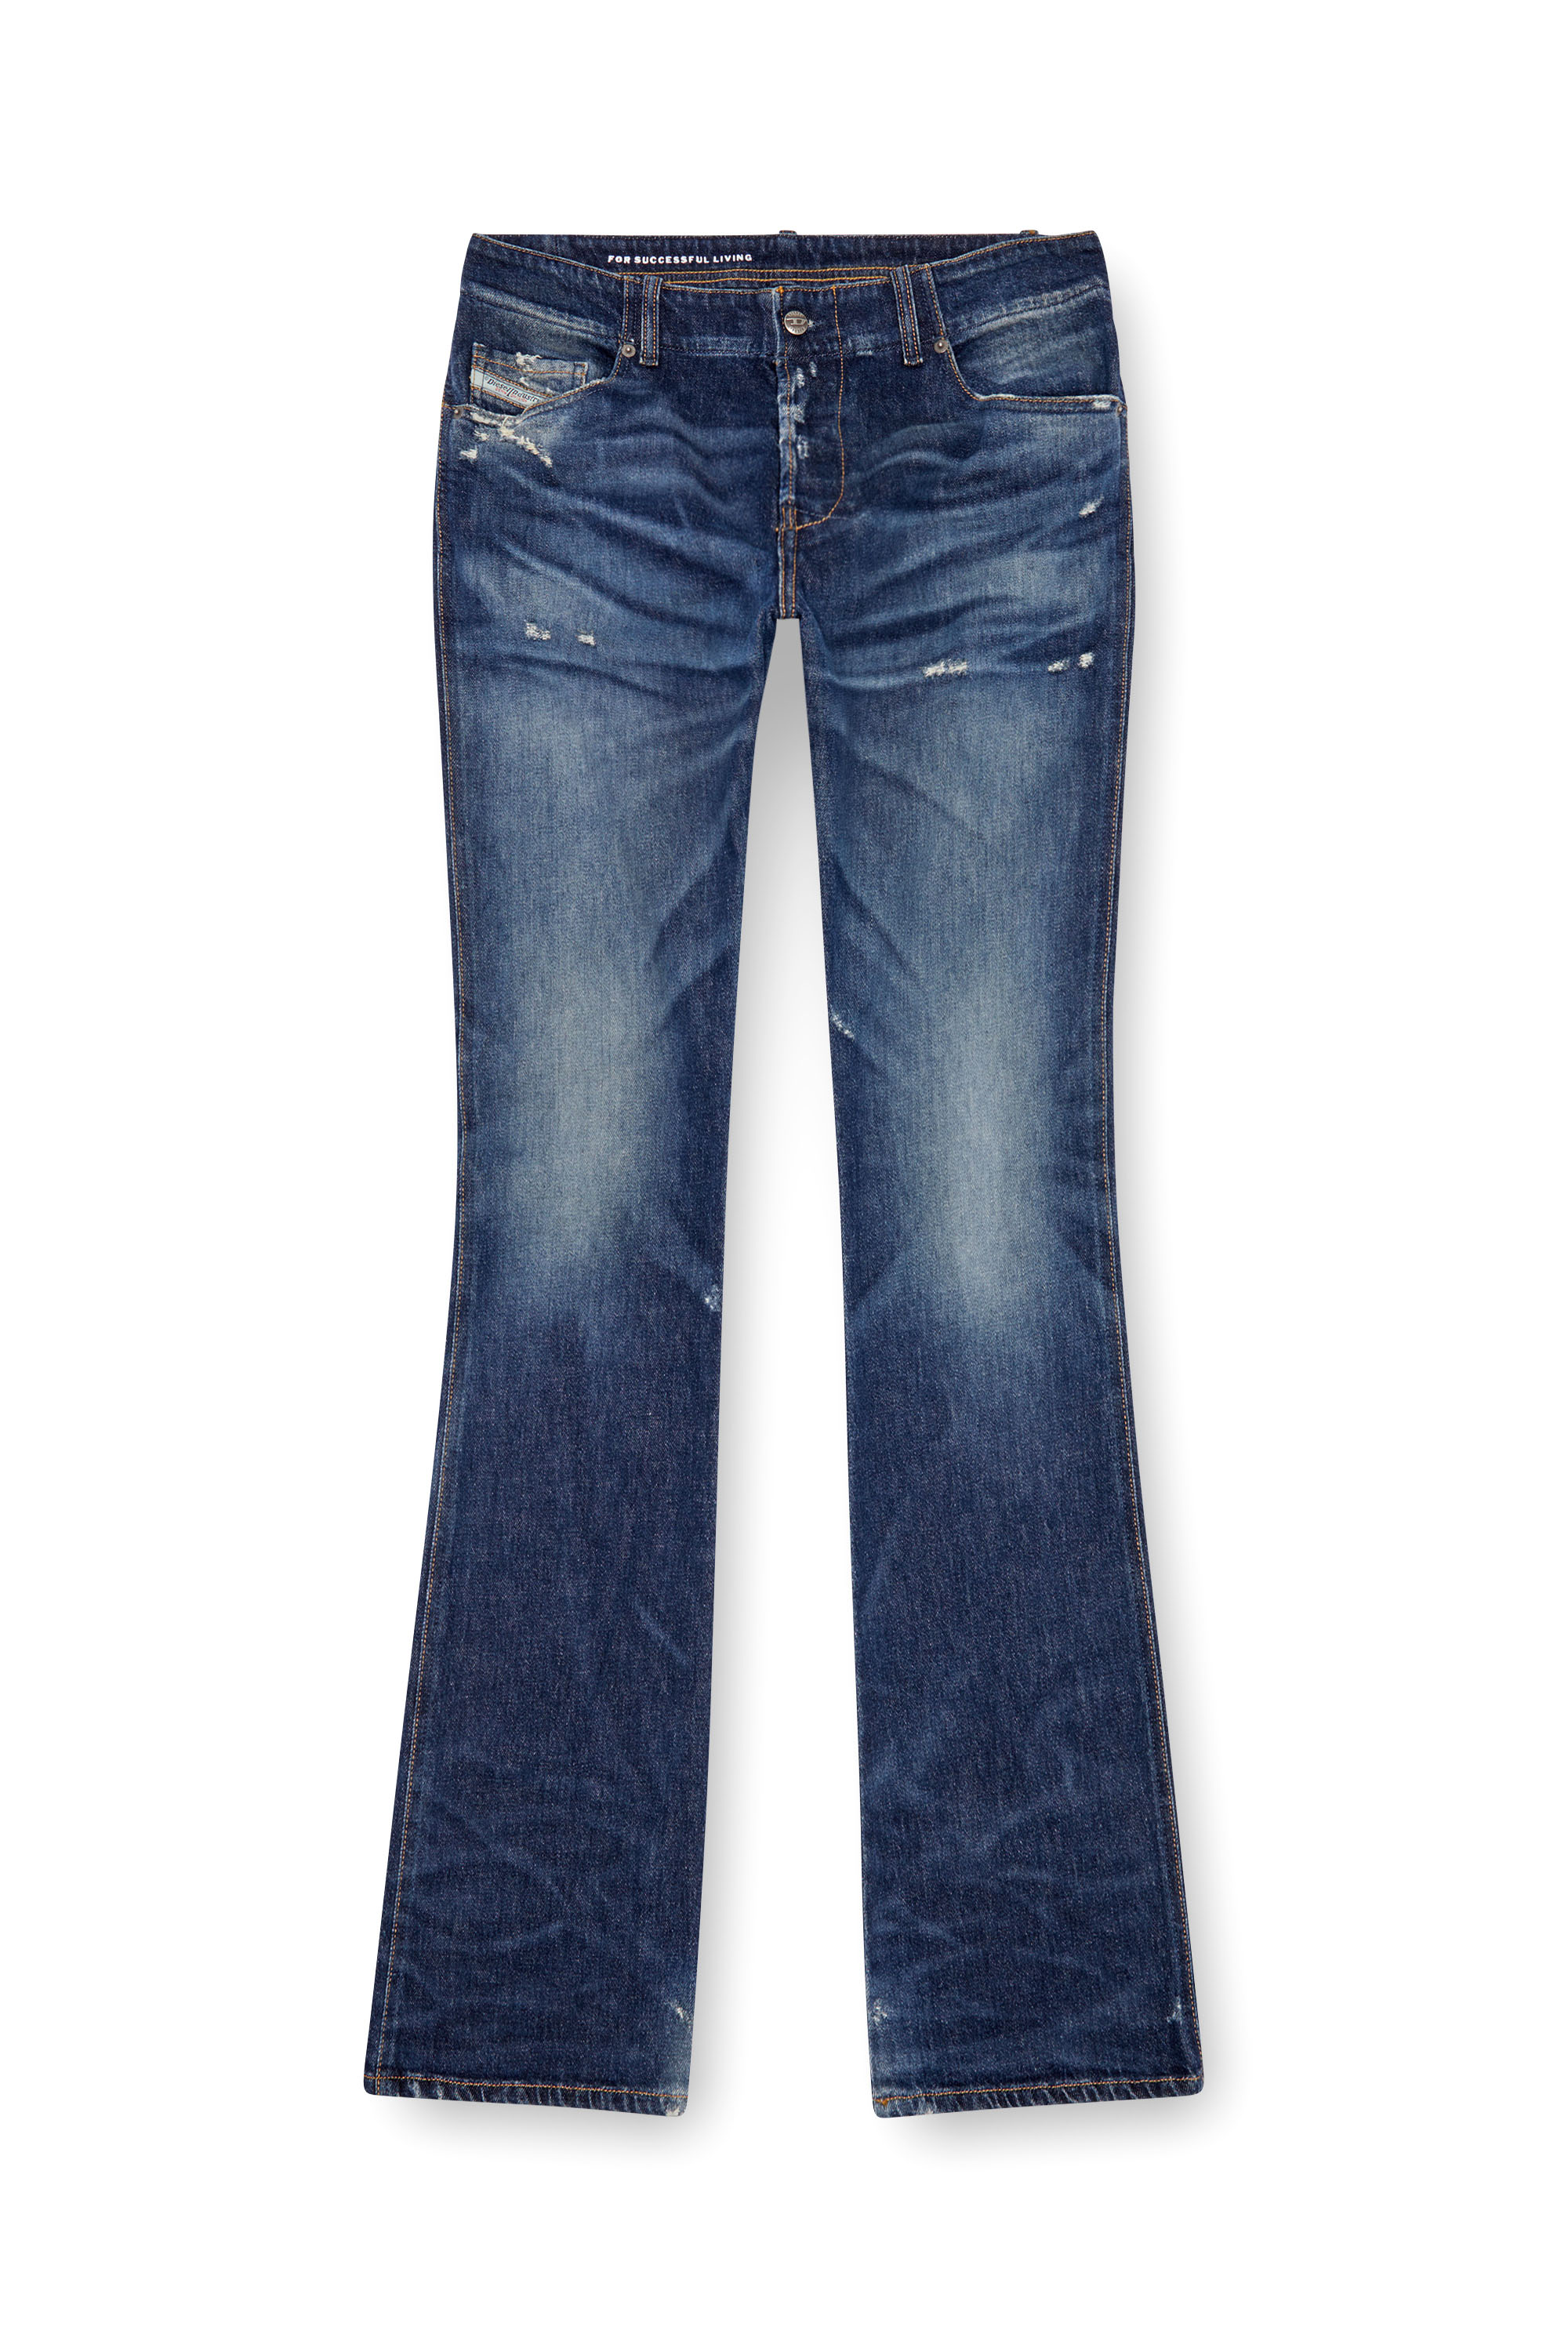 Diesel - Bootcut Jeans D-Backler 09J56, Hombre Bootcut Jeans - D-Backler in Azul marino - Image 3